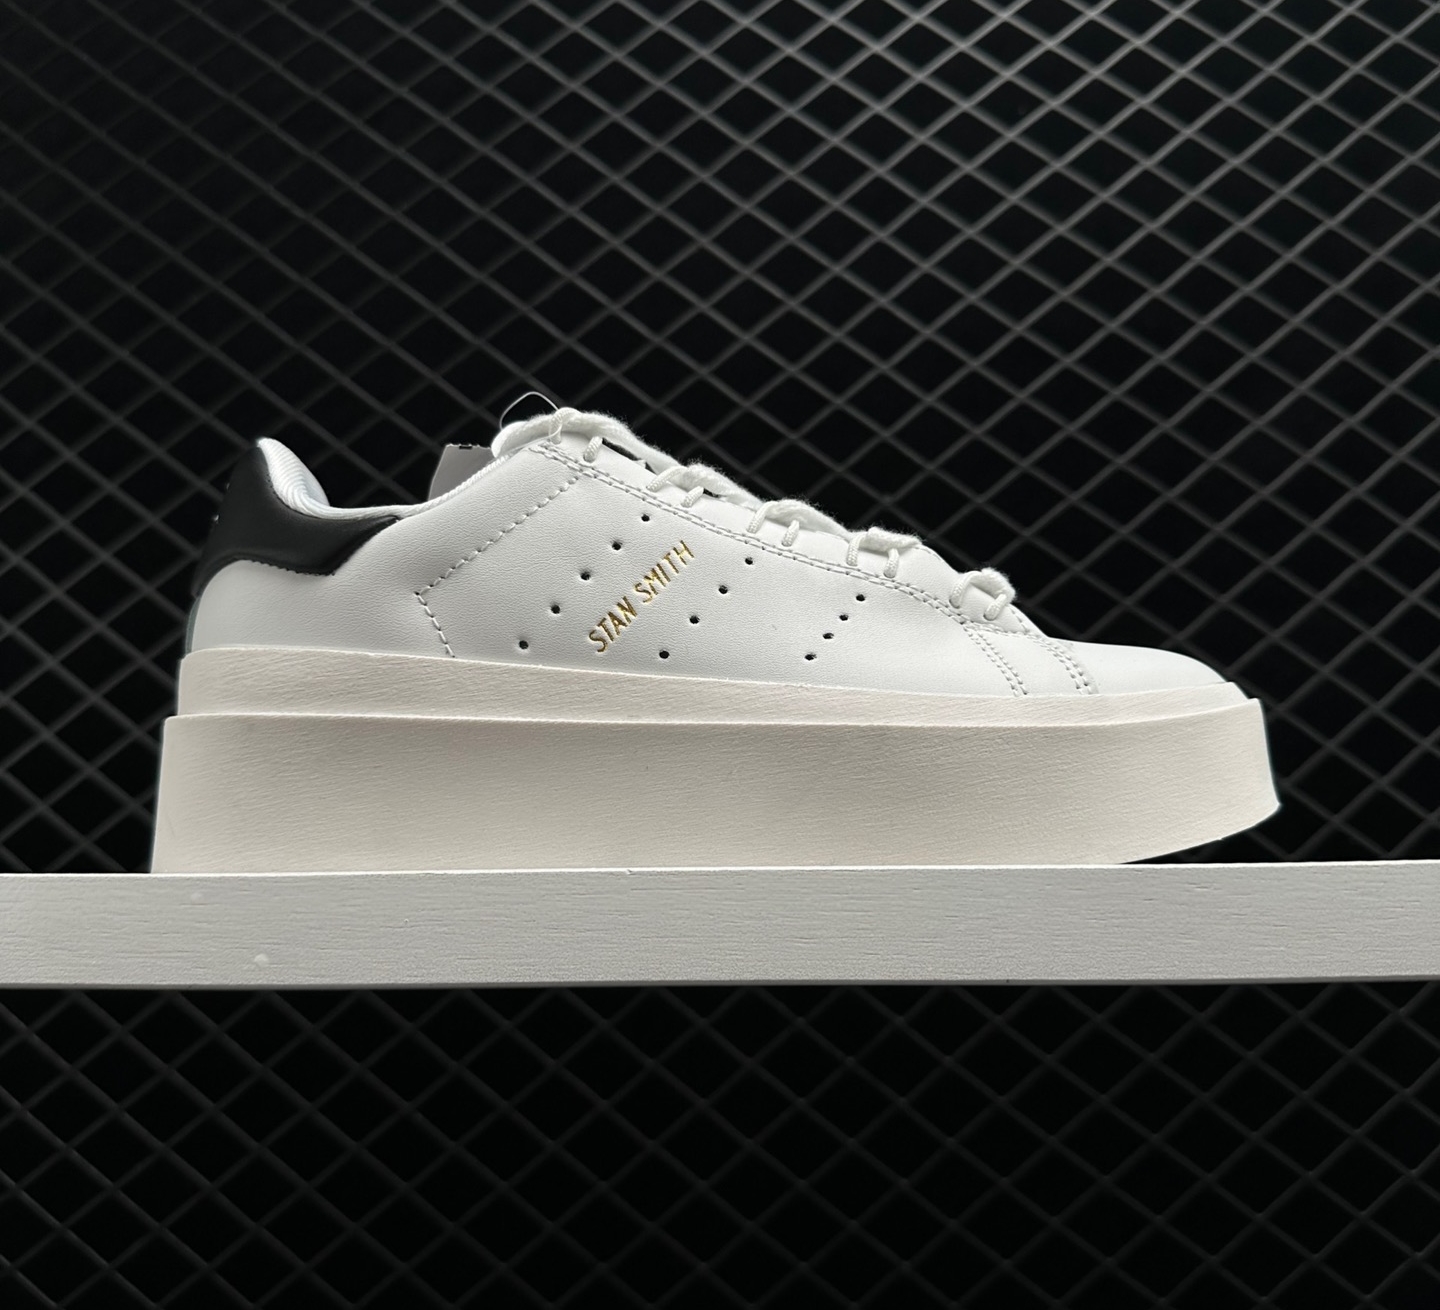 Adidas Stan Smith Bonega 'White Black' - Classic design with a modern twist